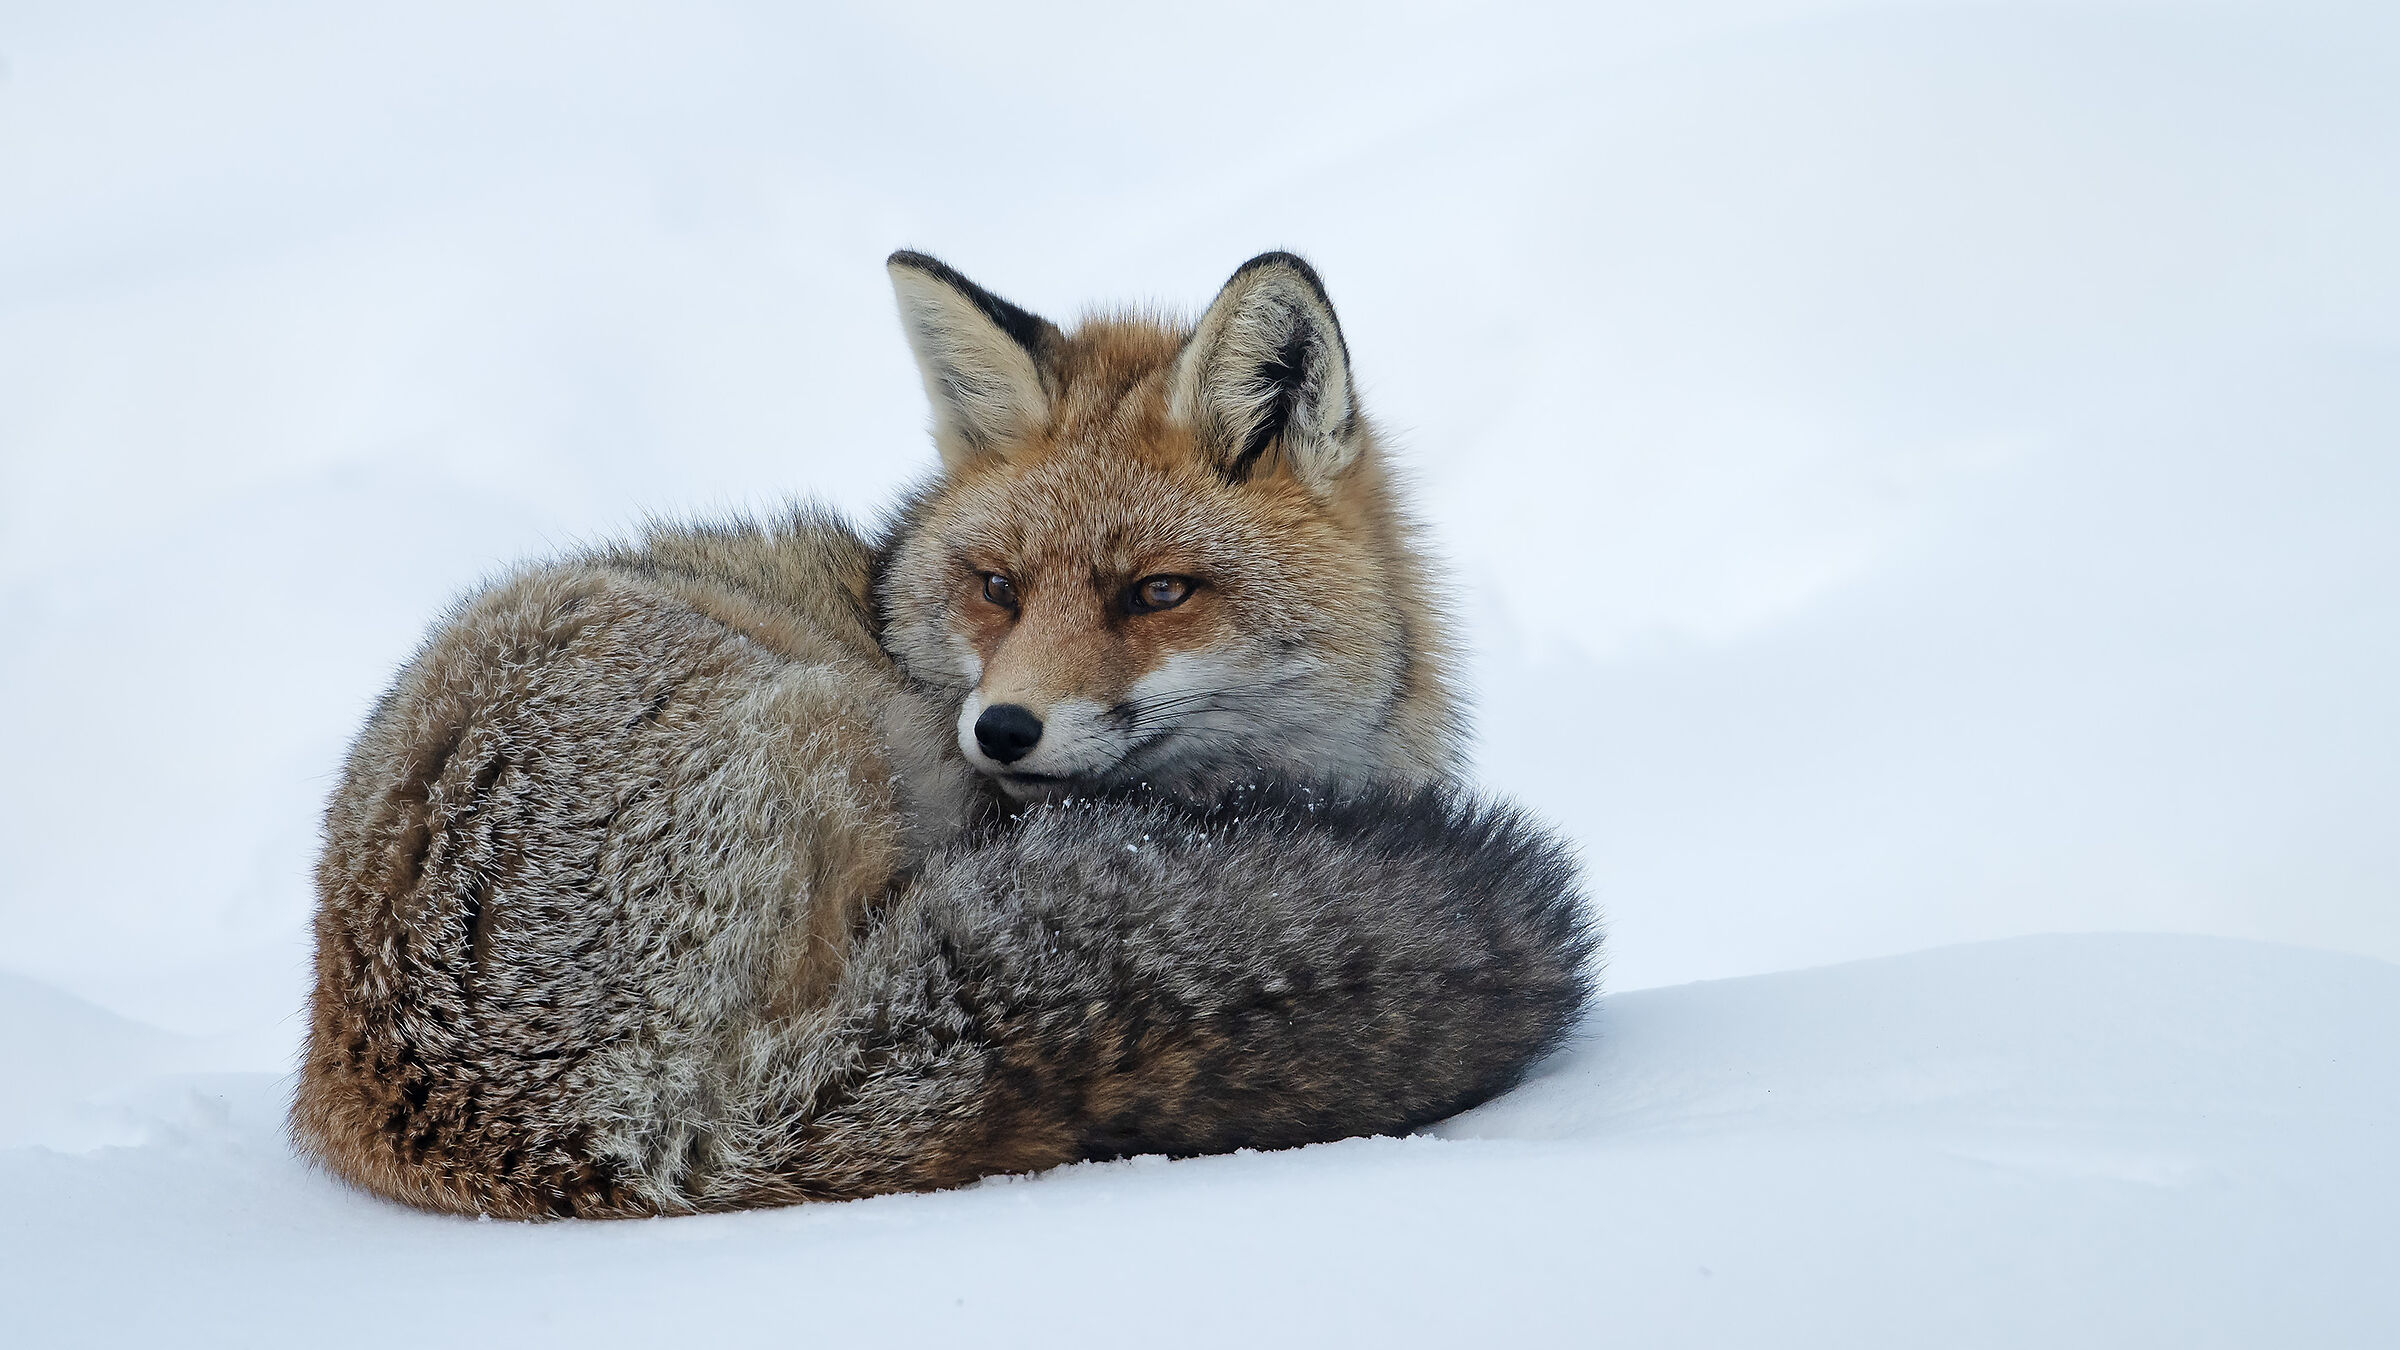 The Fox's Winter...